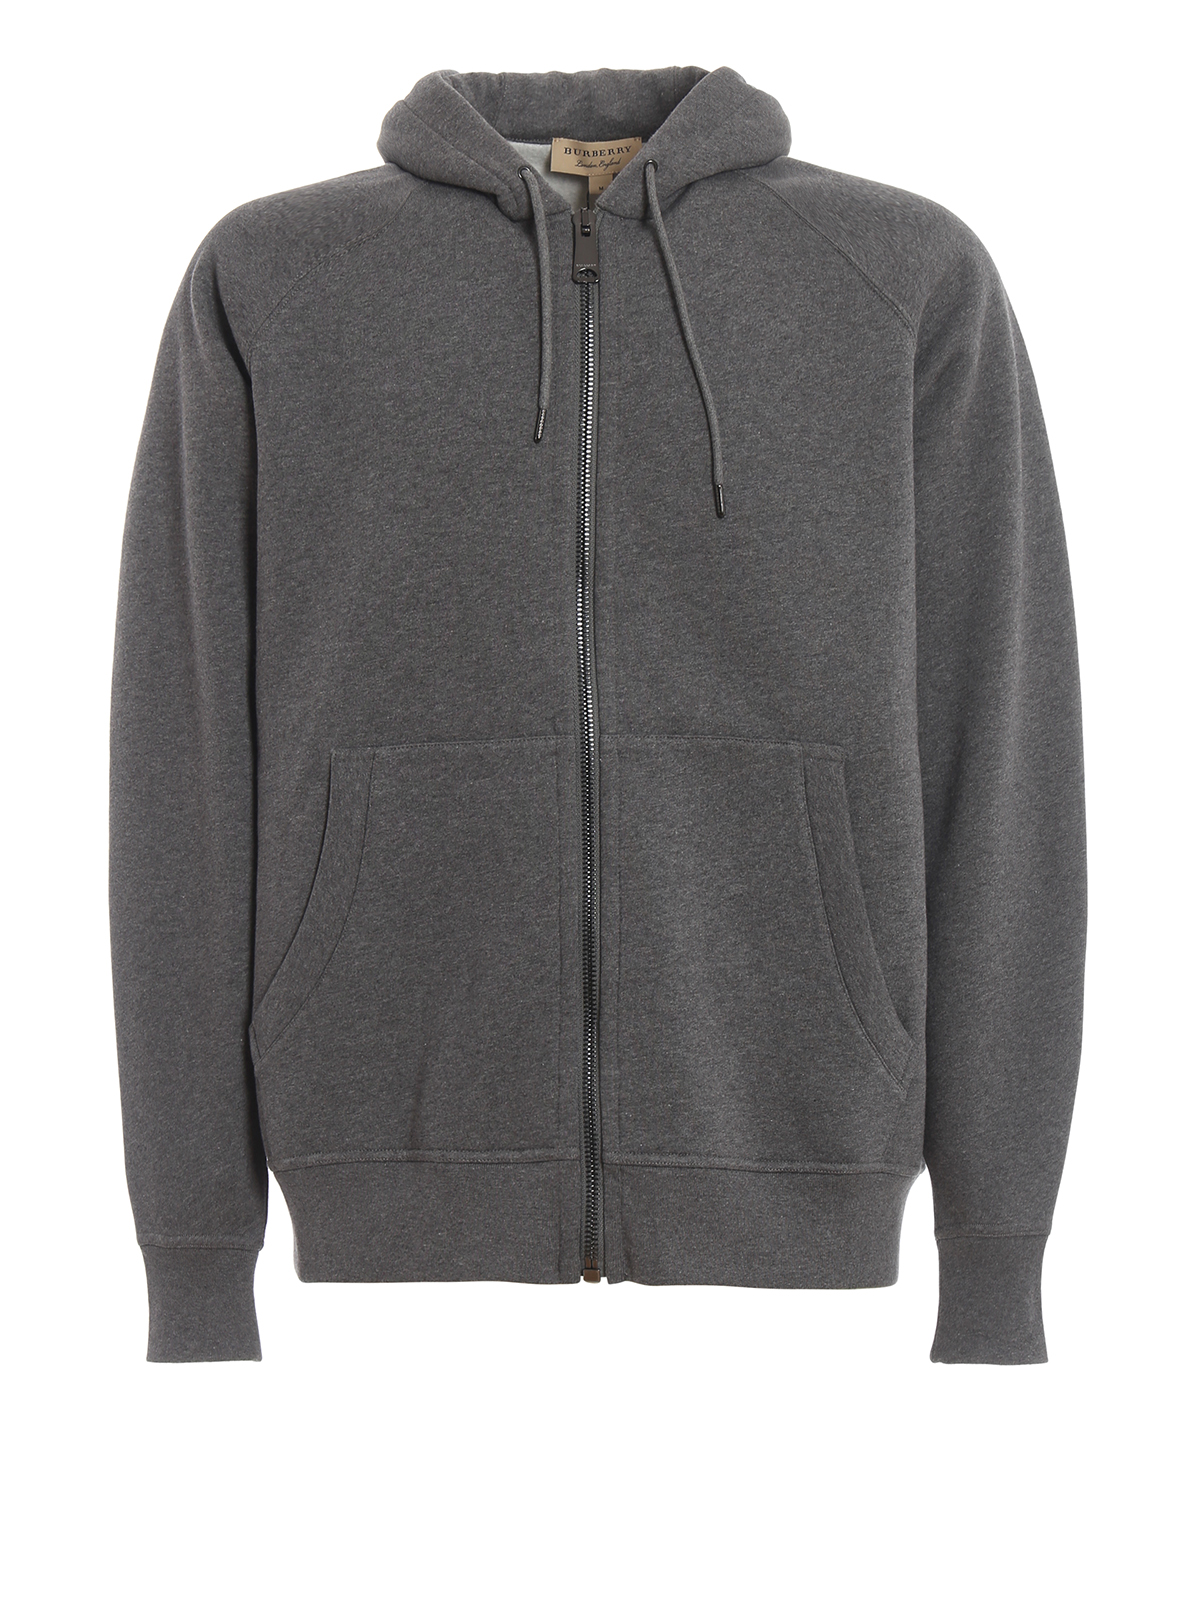 burberry hoodie 2013